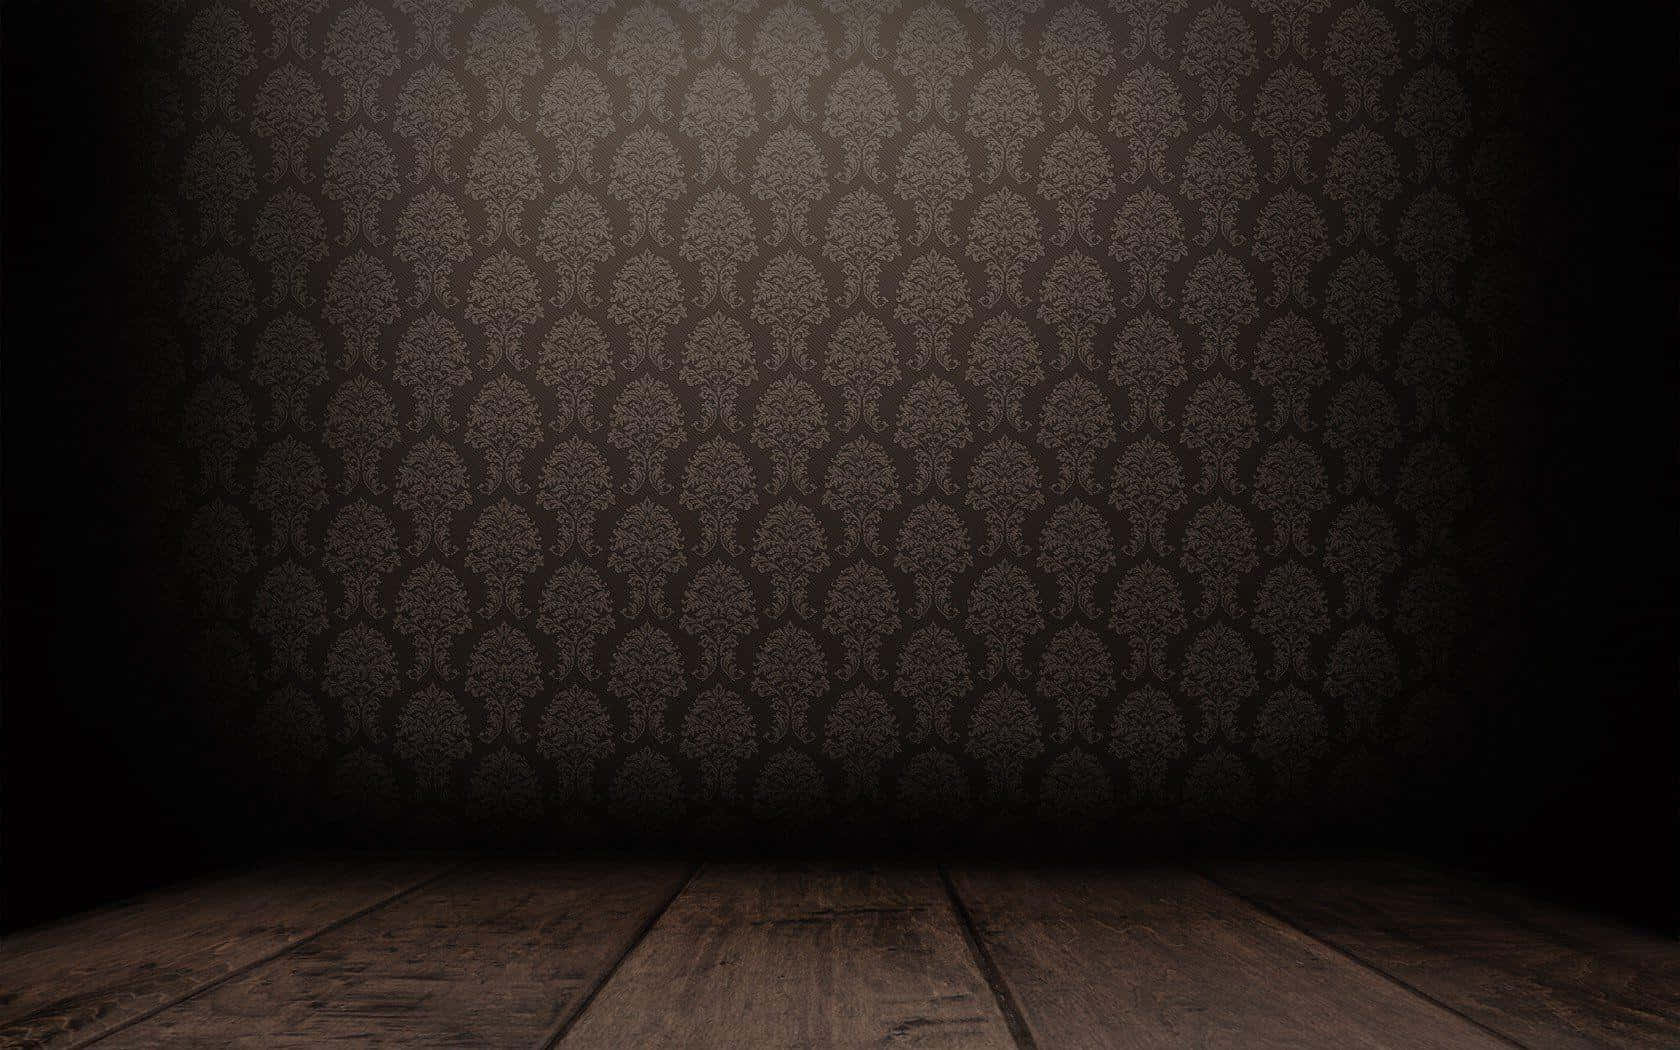 Mysterious Dark Room with Illuminated Doorway Wallpaper